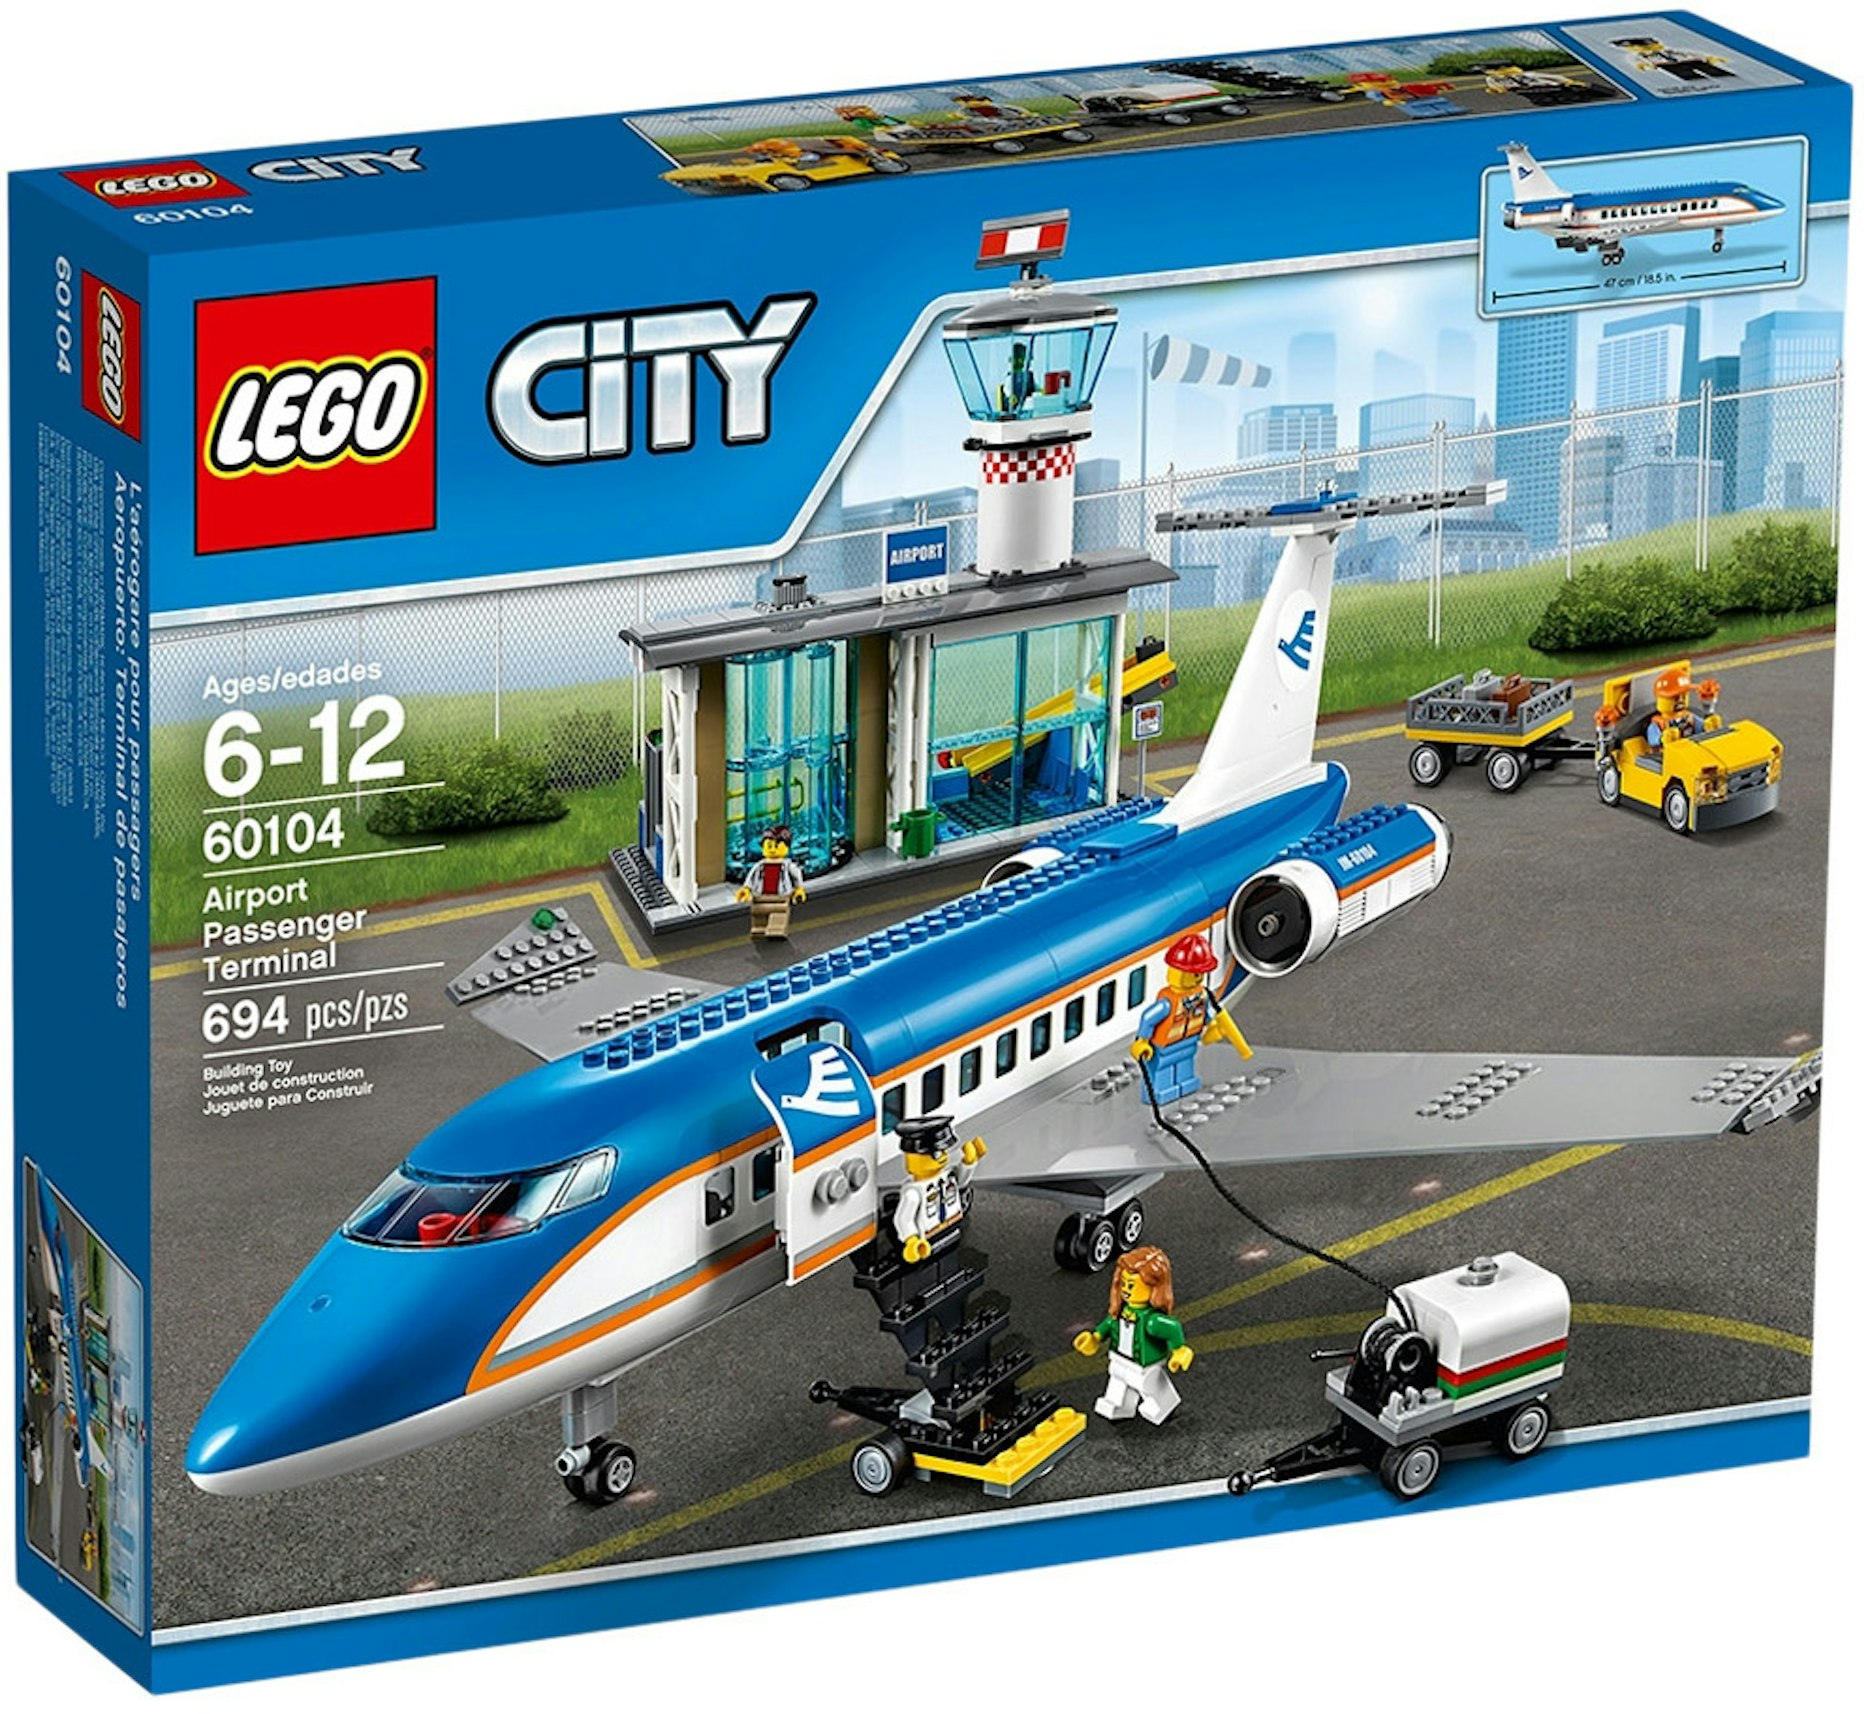 ordbog halv otte parfume LEGO City Airport Passenger Terminal Set 60104 - US